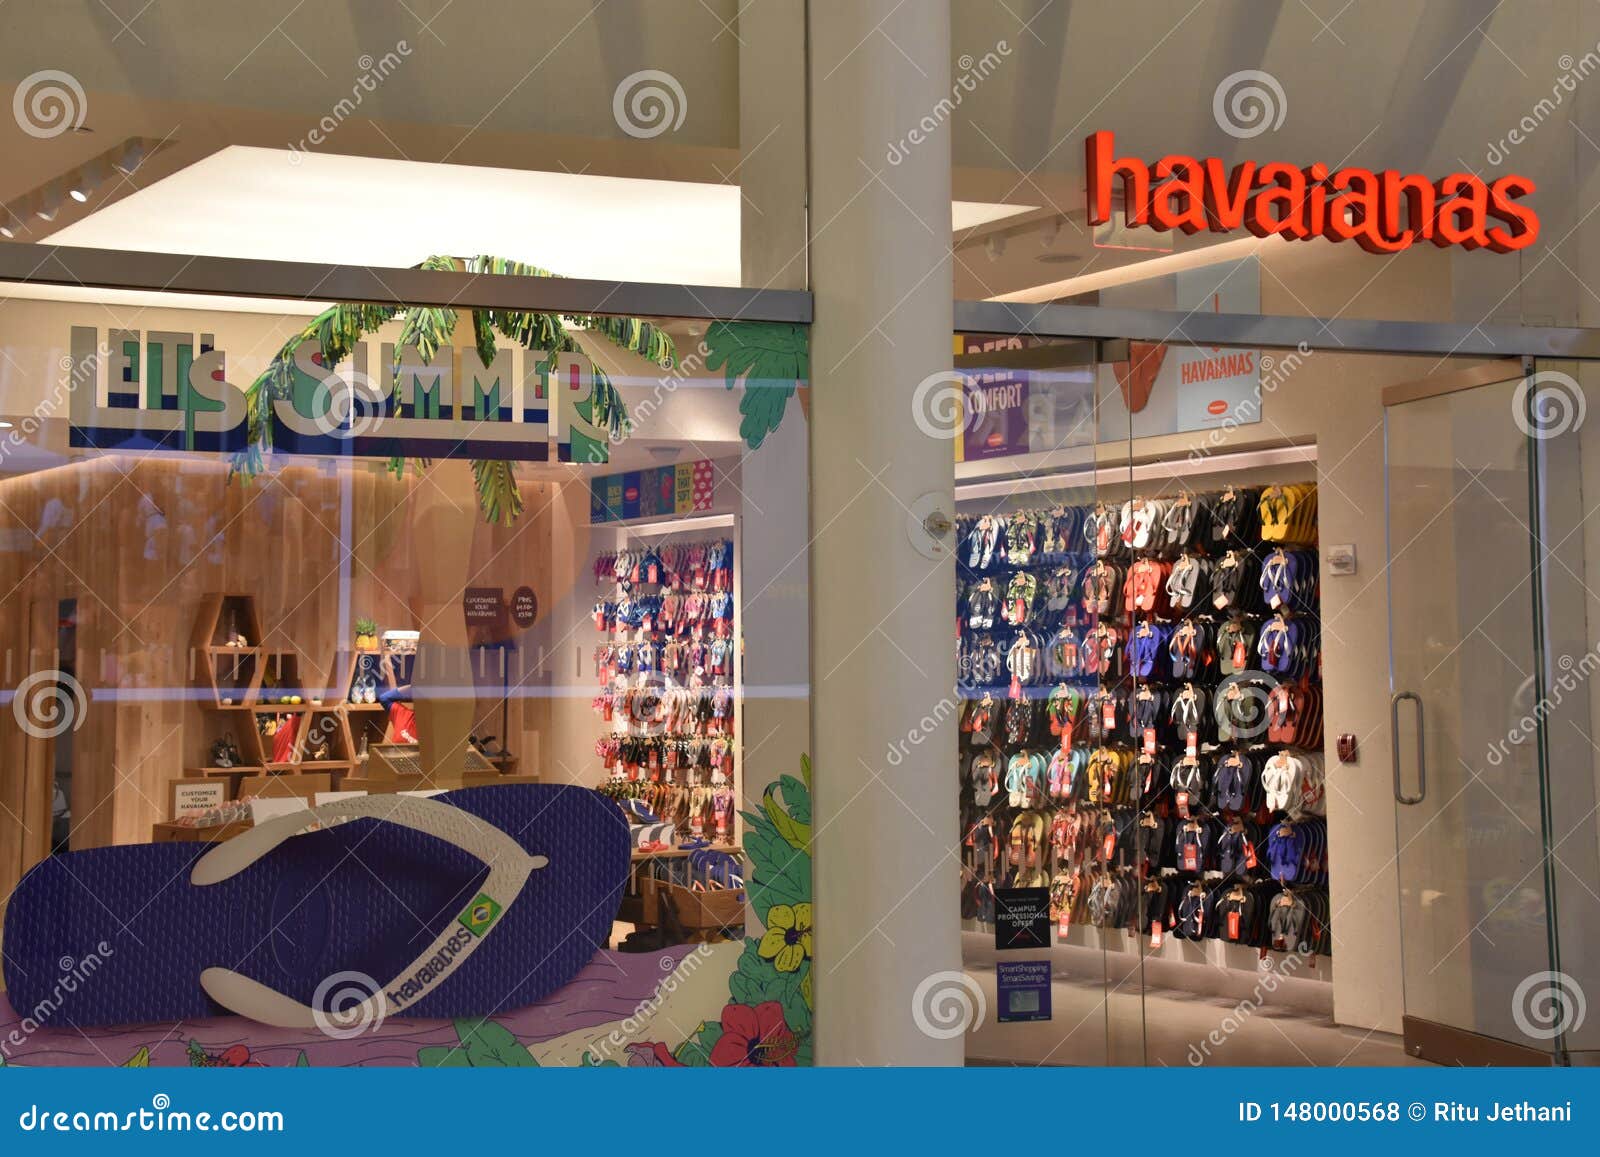 havaianas store locations